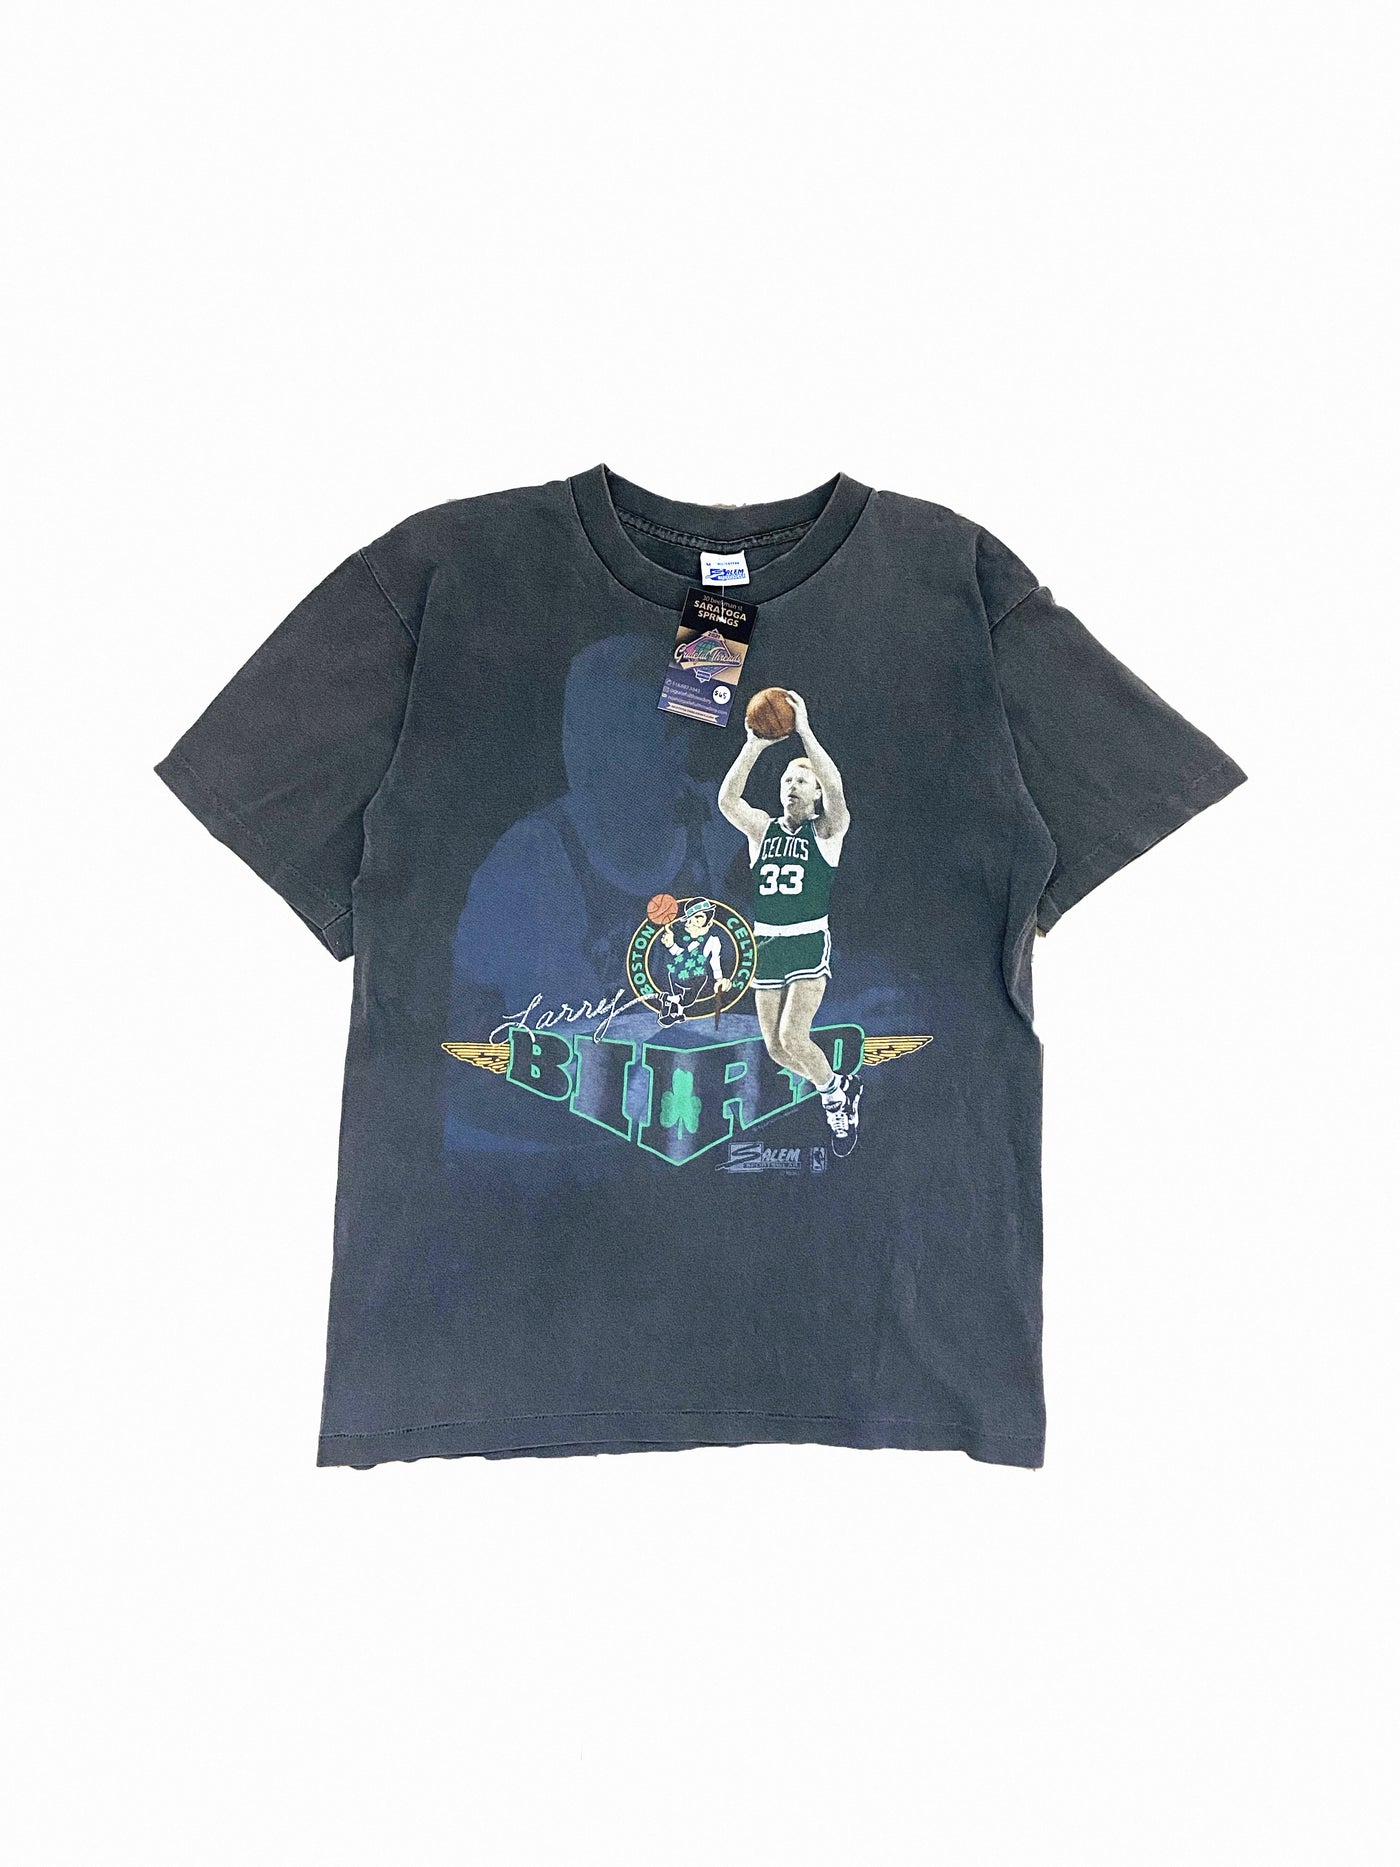 Vintage 1990 Larry Bird Celtics T-Shirt